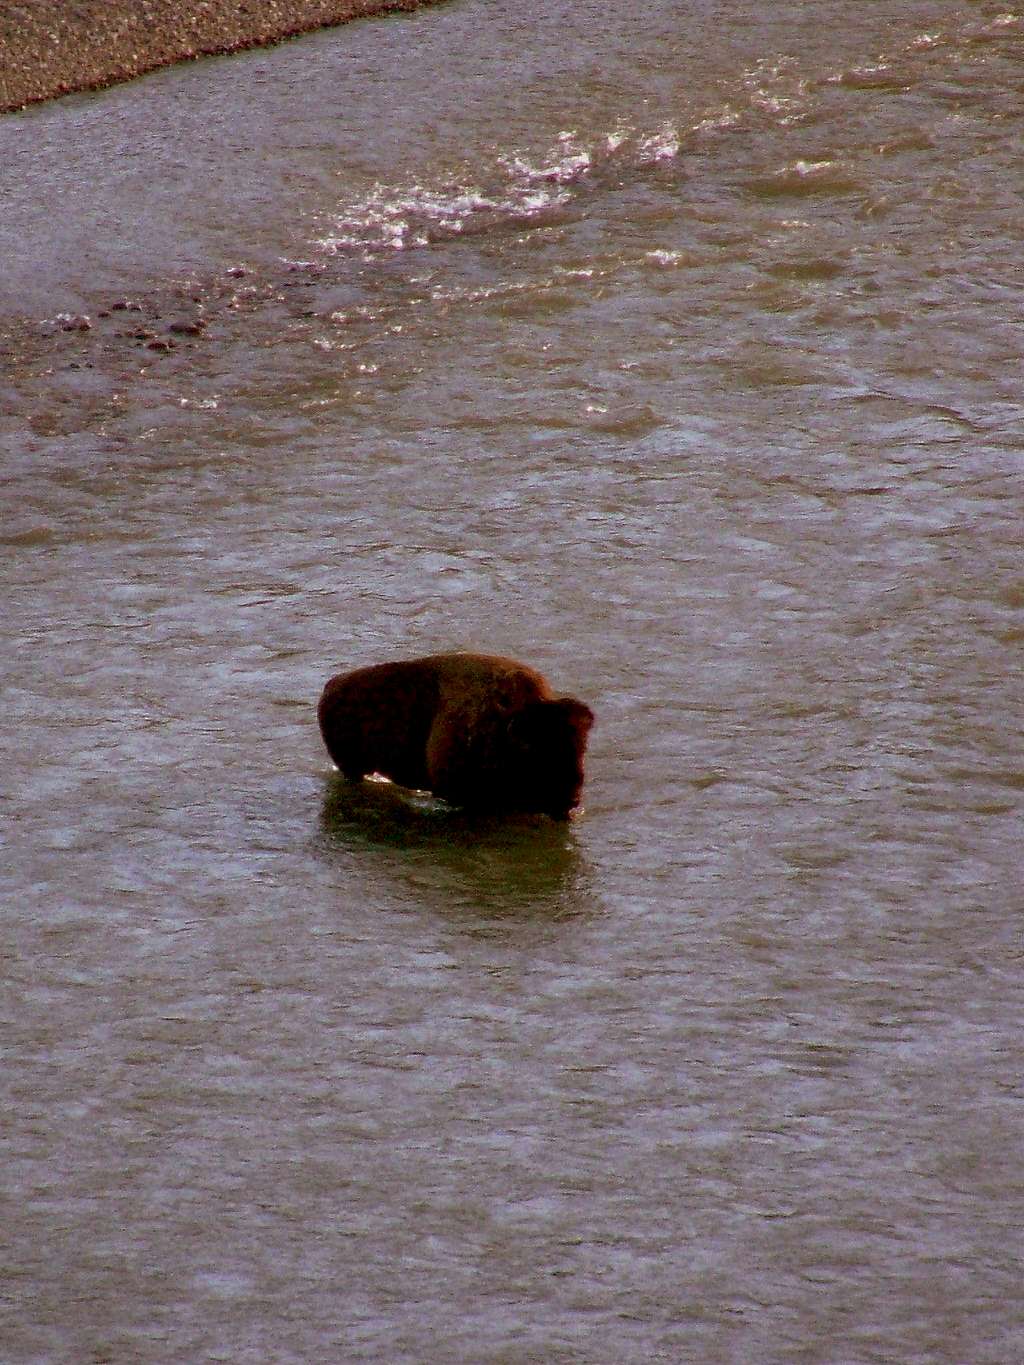 Bison crossing river.